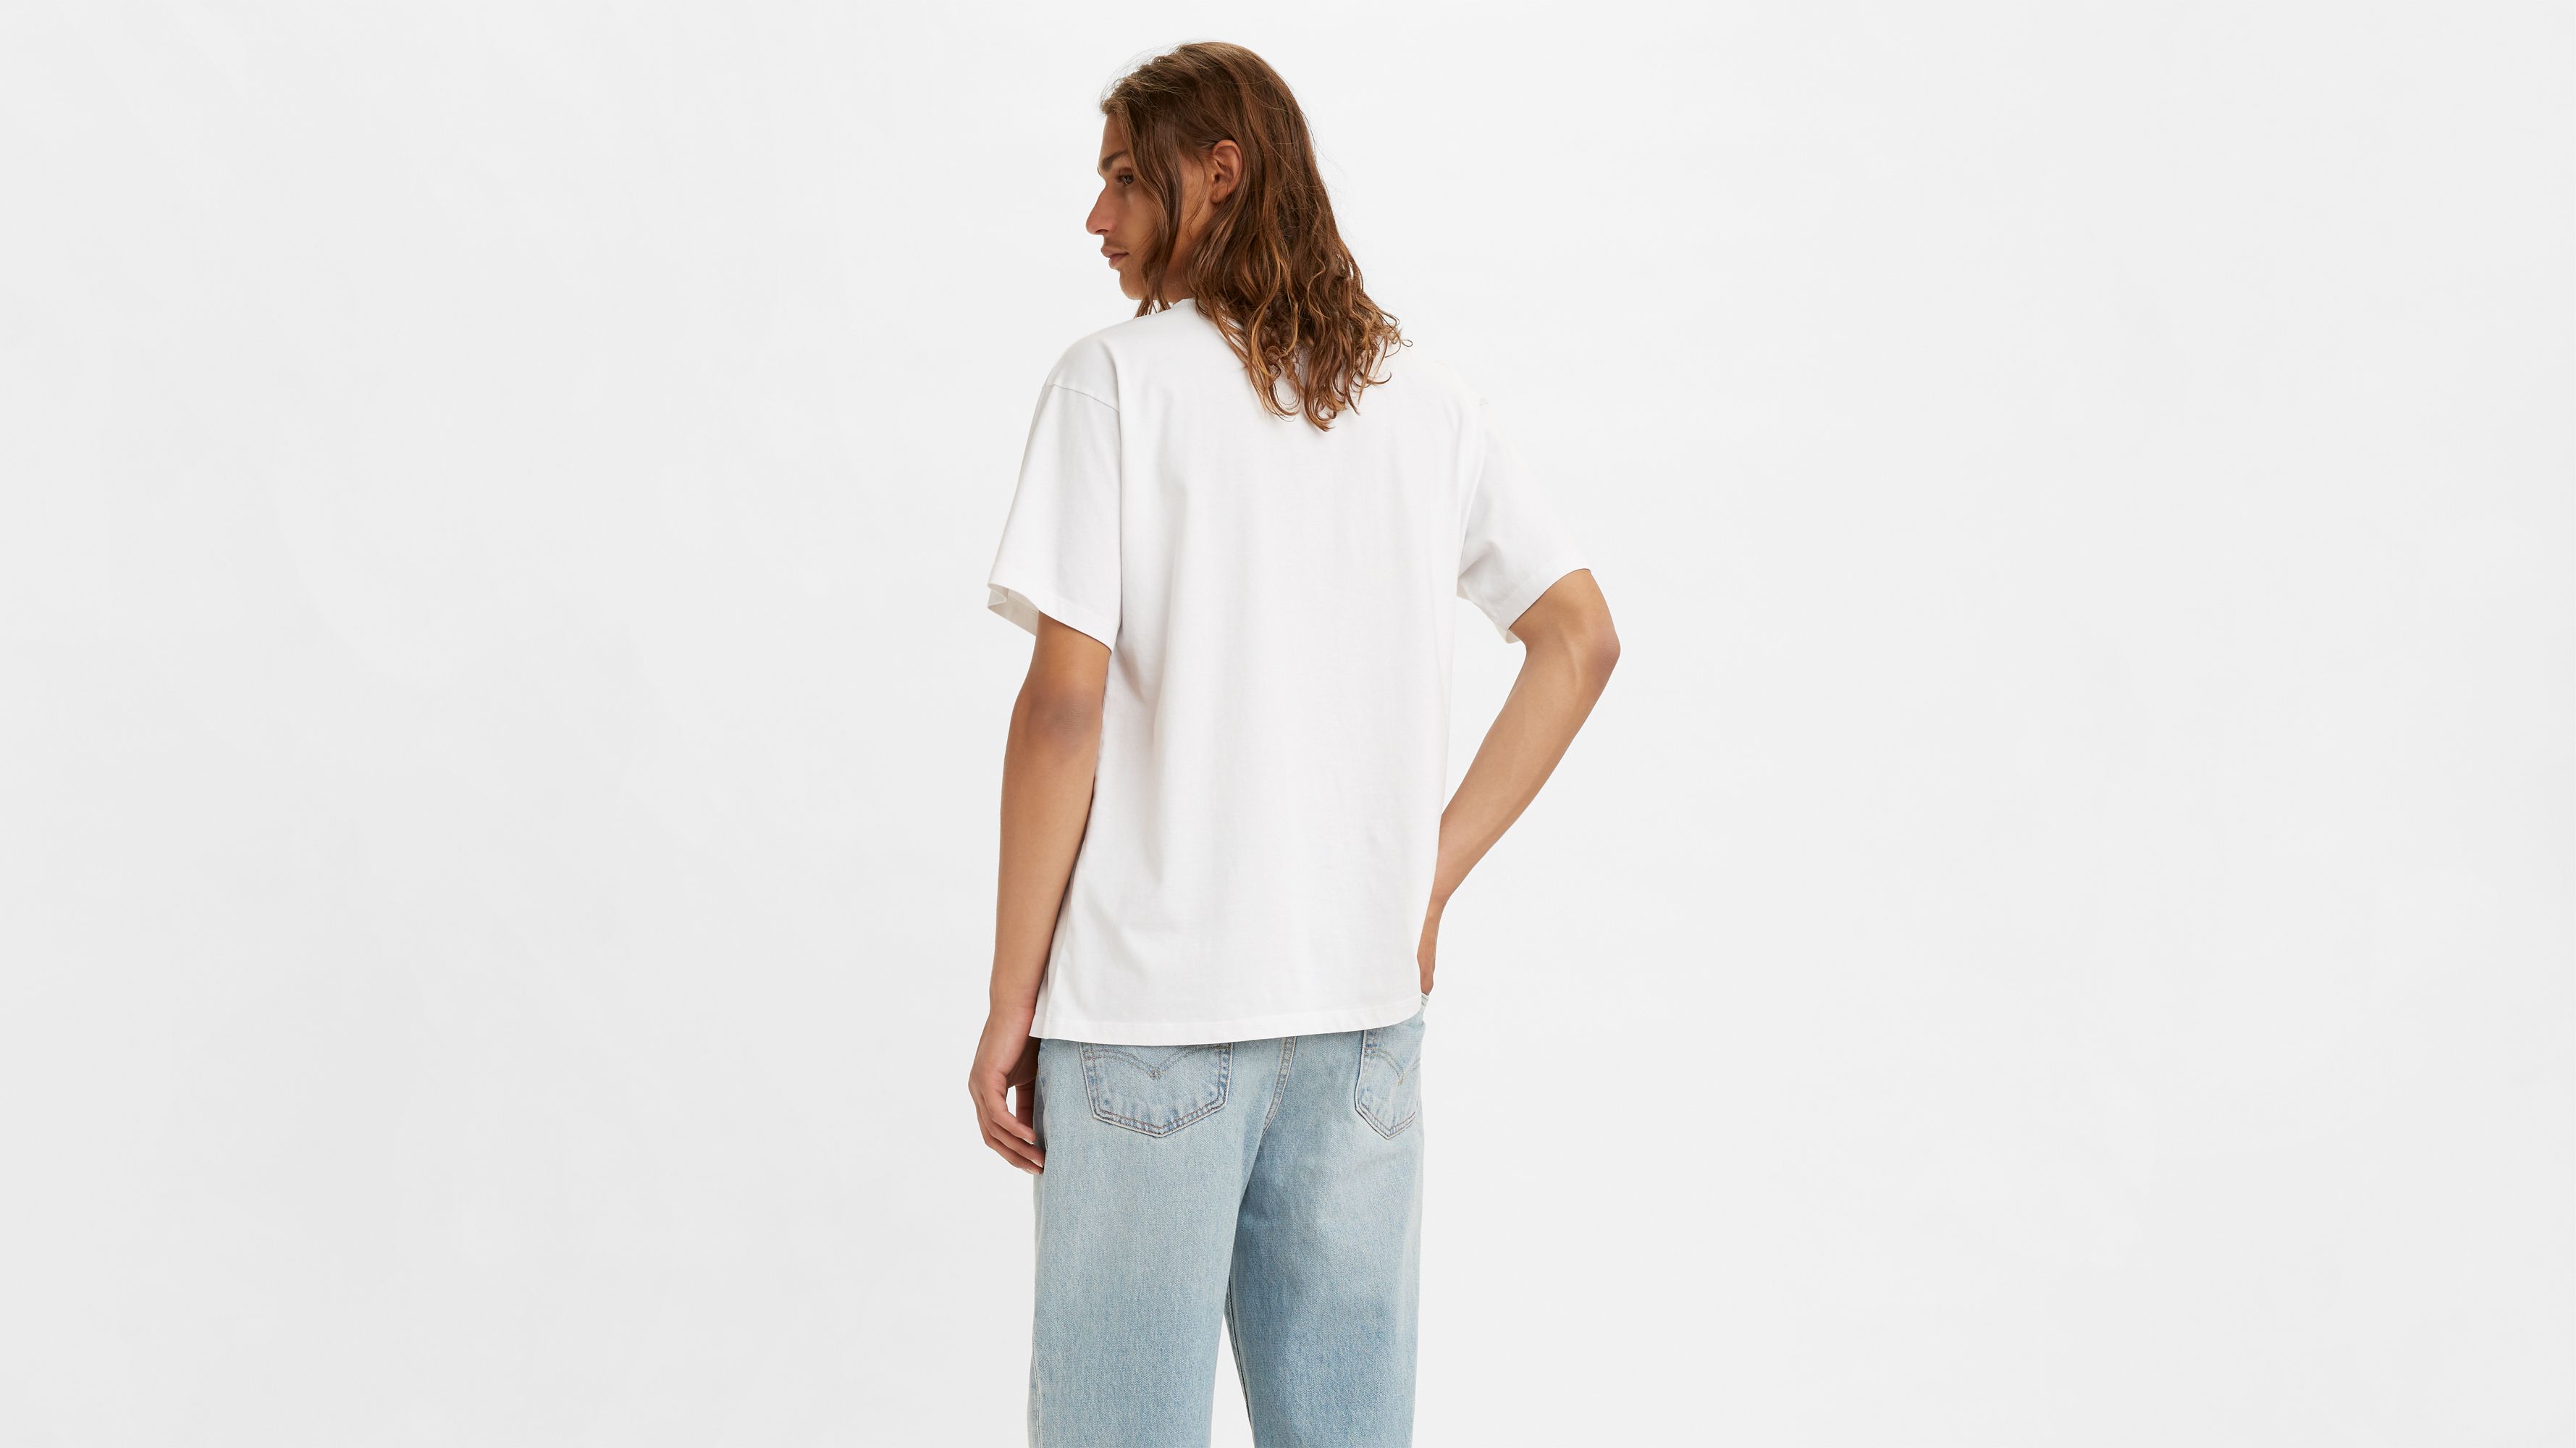 levi's white t shirt price